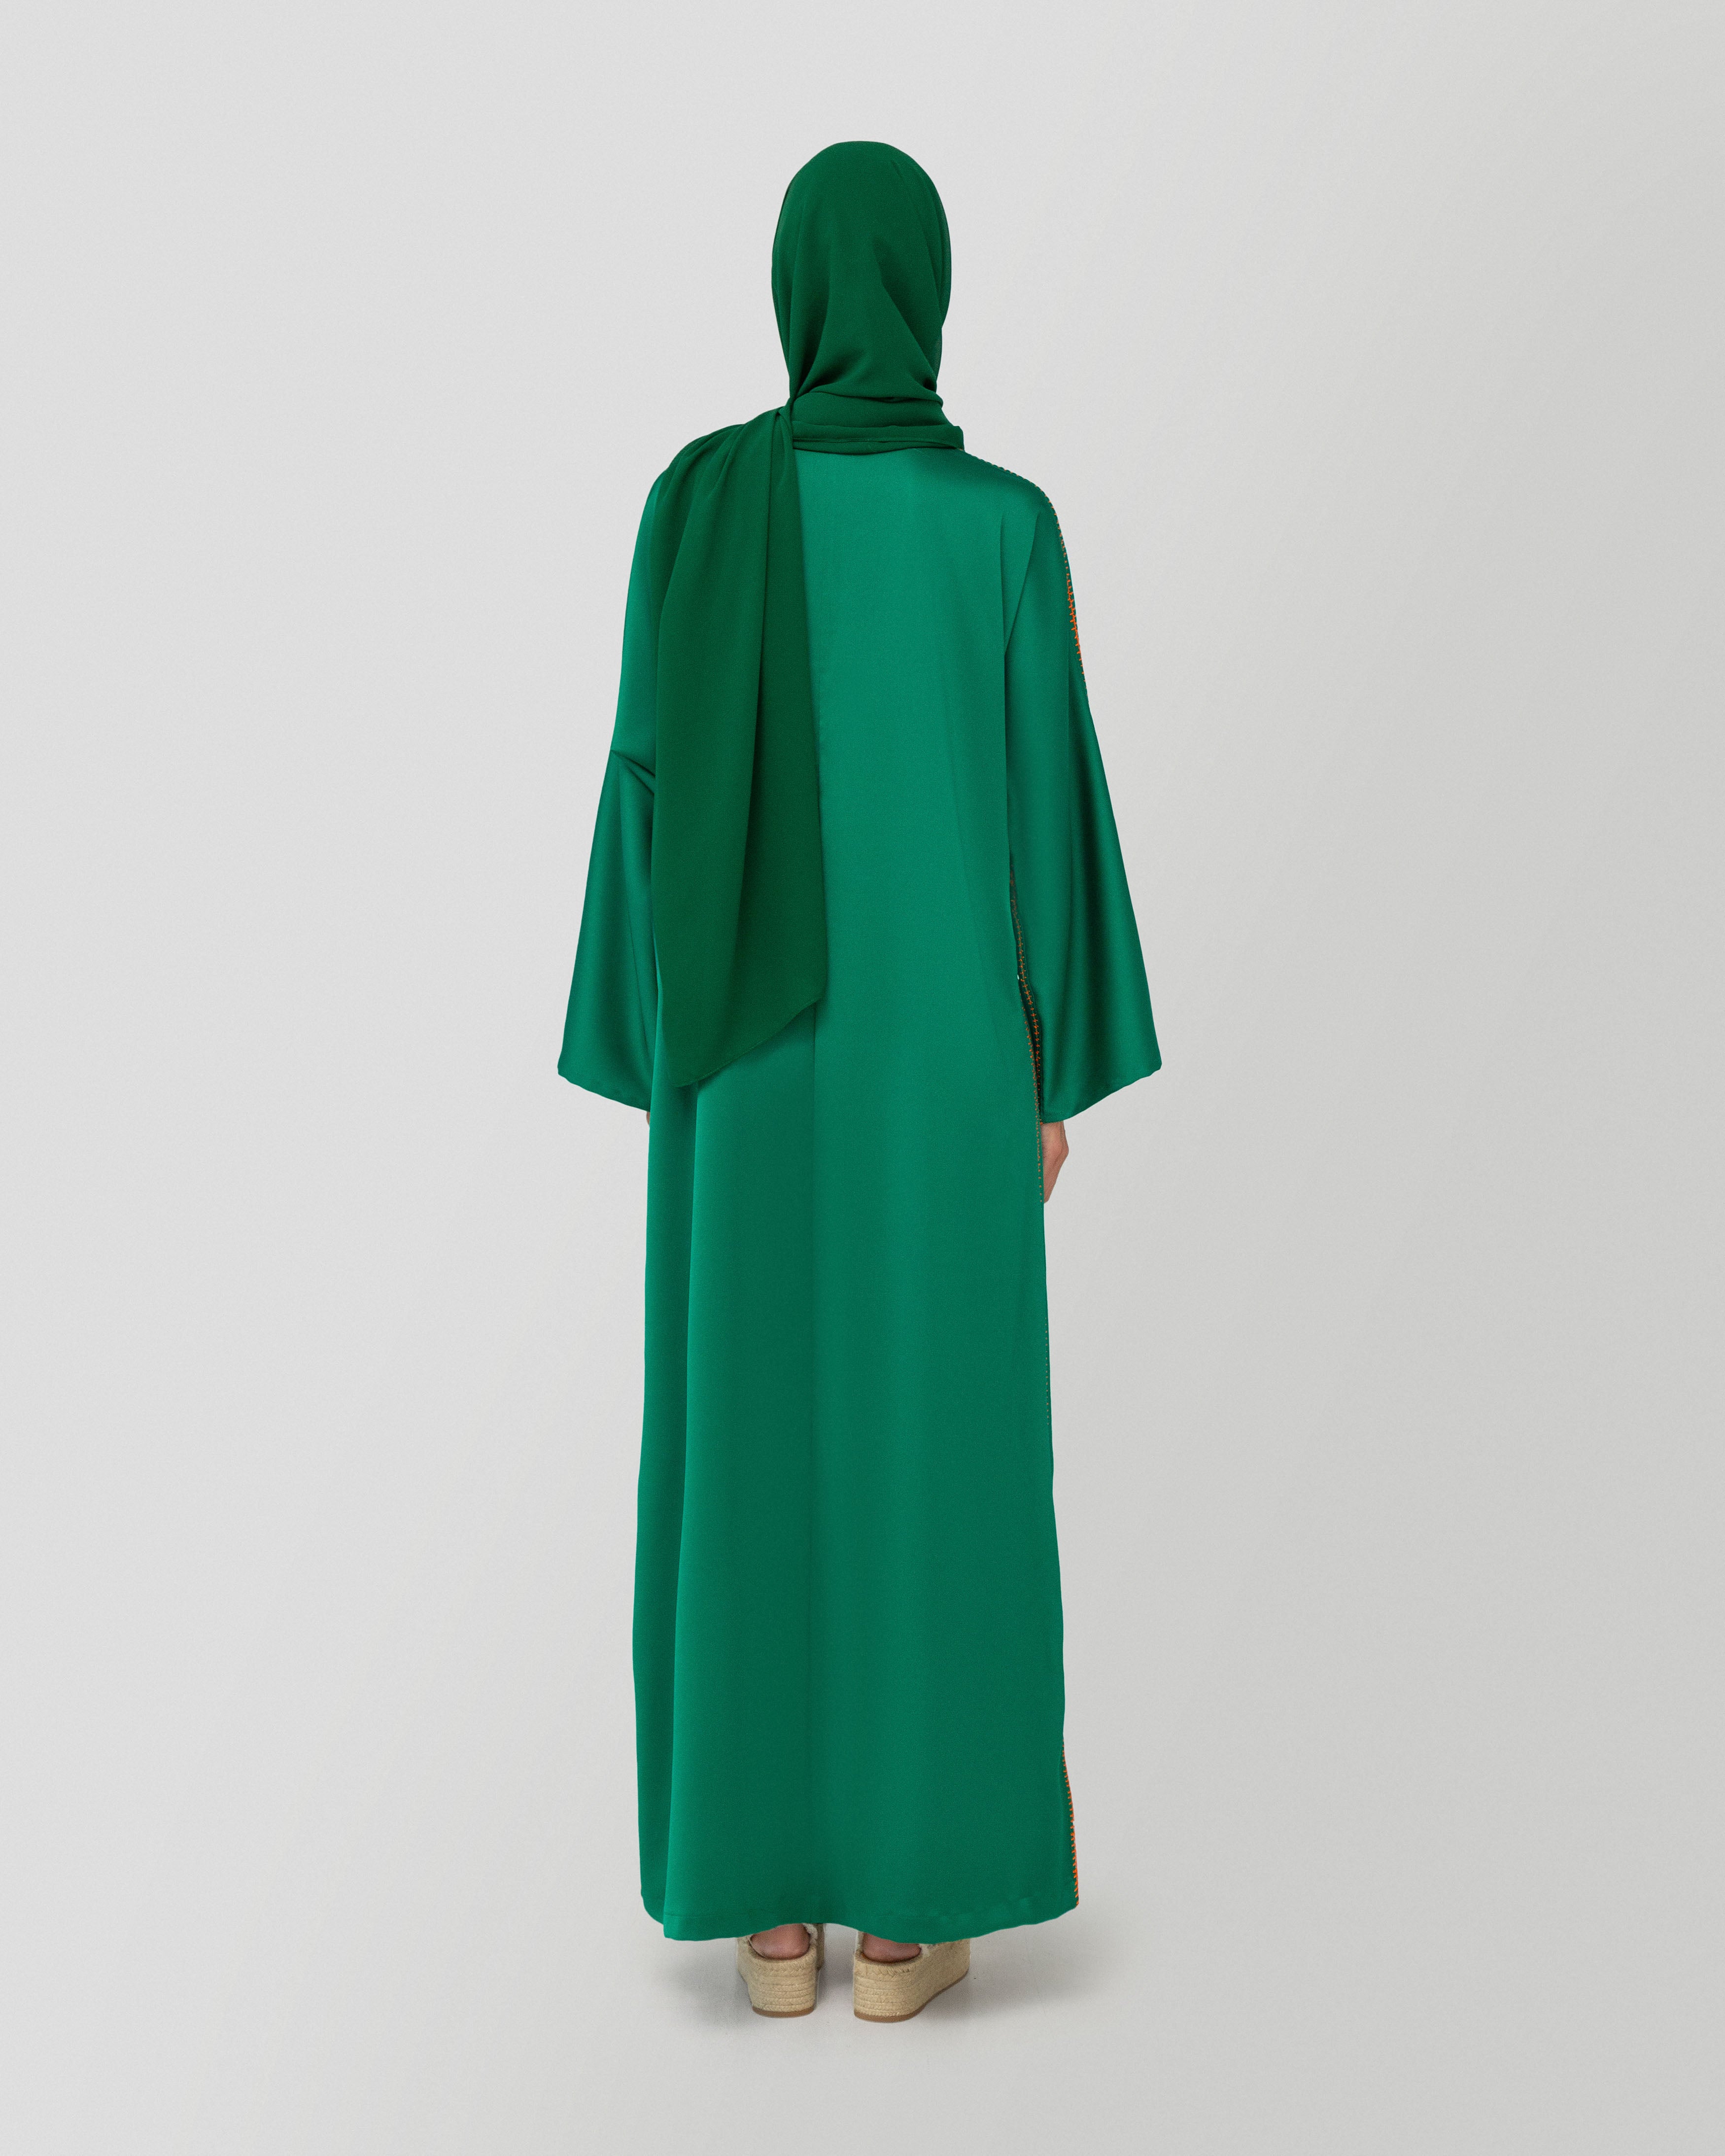 Aya Dress in Emerald